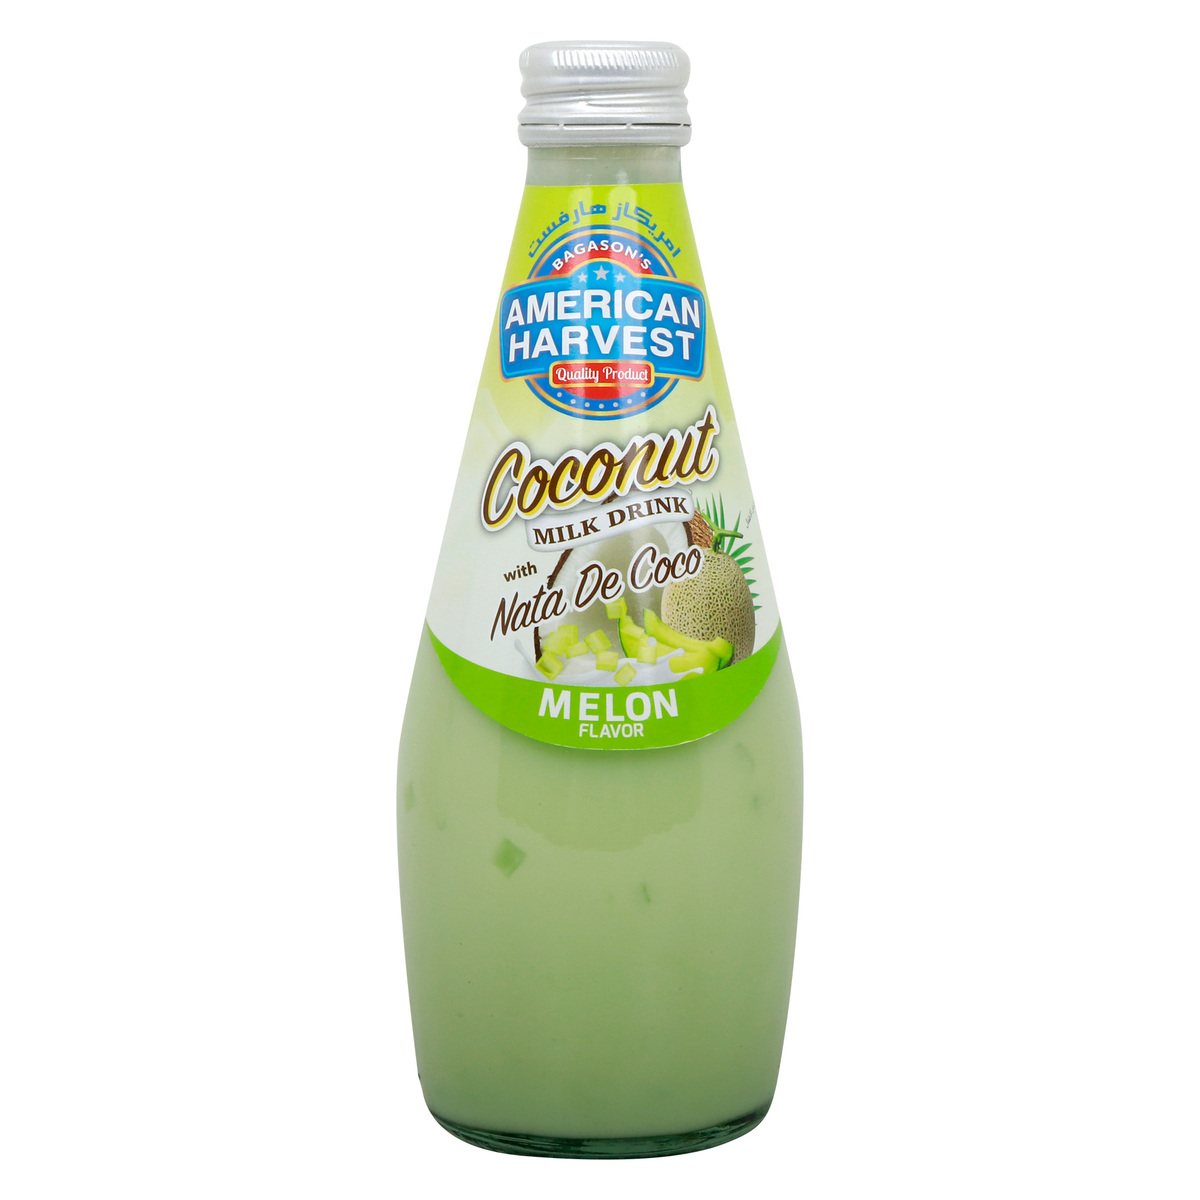 American Harvest Coconut Milk Drink With Nata De Coco Melon Flavour 290 ml